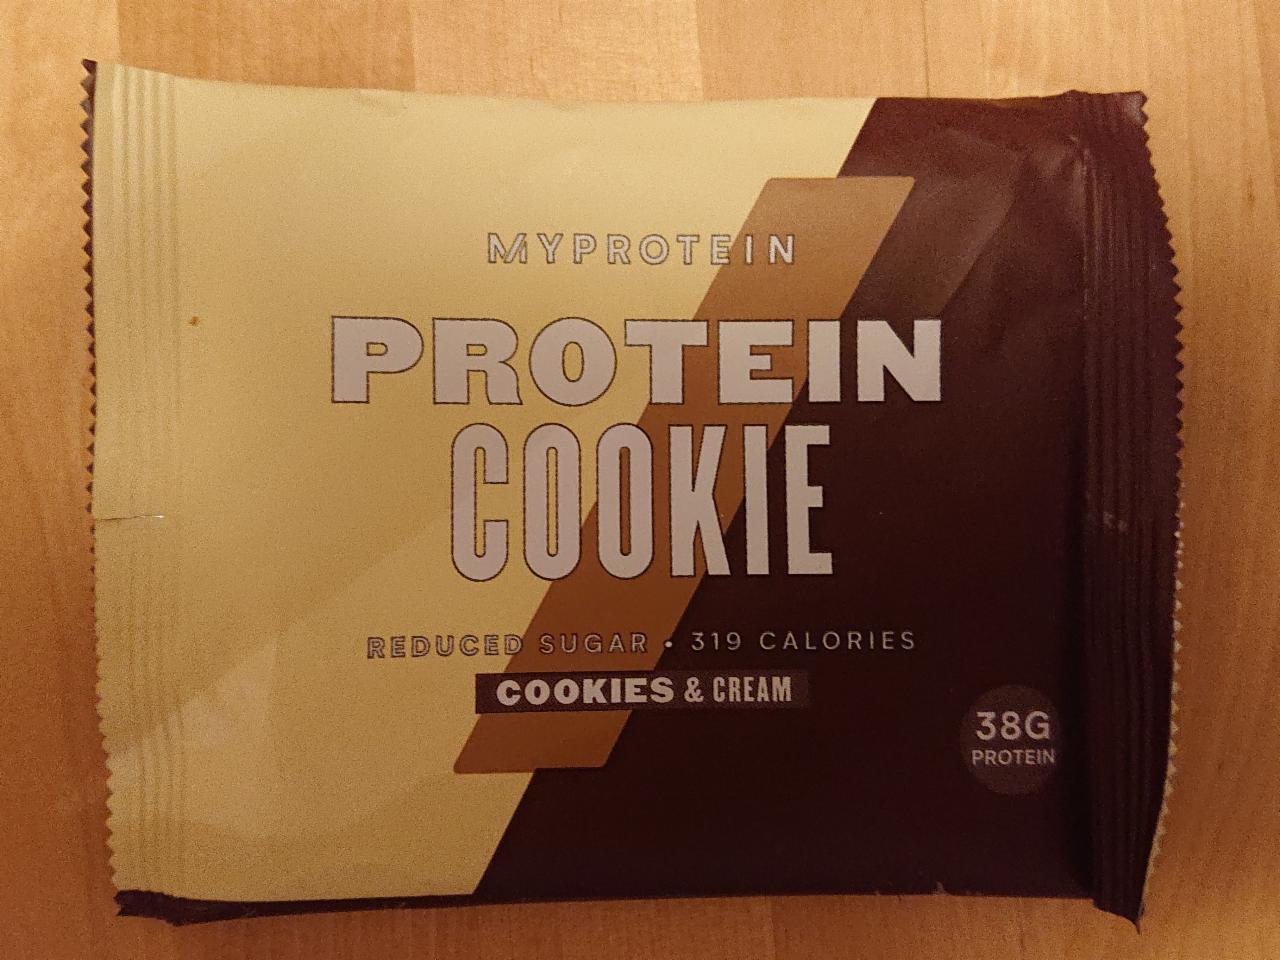 Fotografie - Protein Cookie reduced sugar Cookies & Cream My Protein